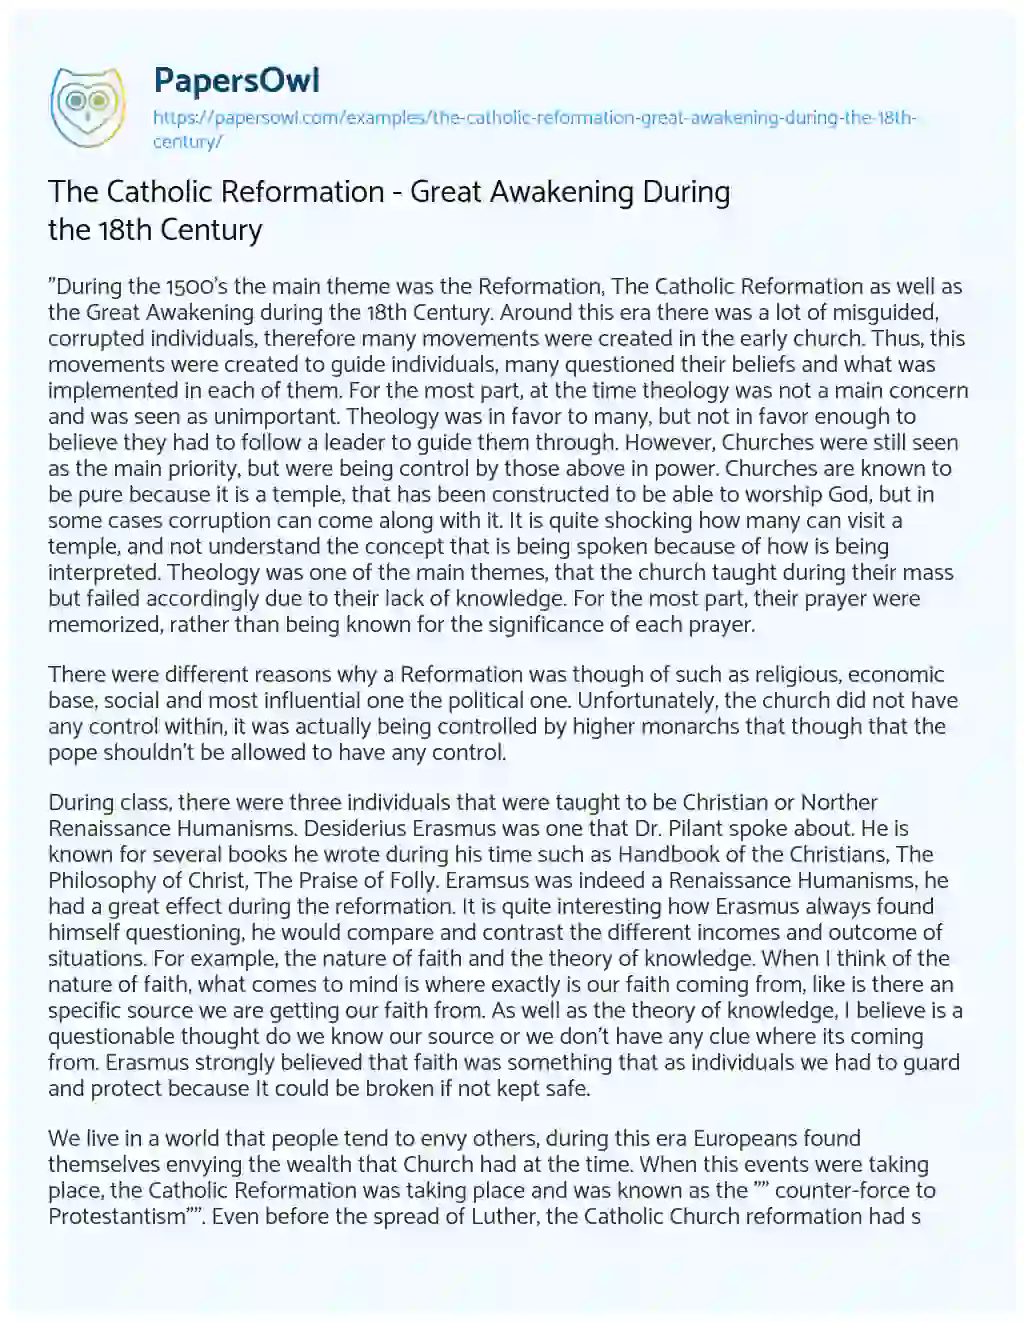 Essay on The Catholic Reformation – Great Awakening during the 18th Century